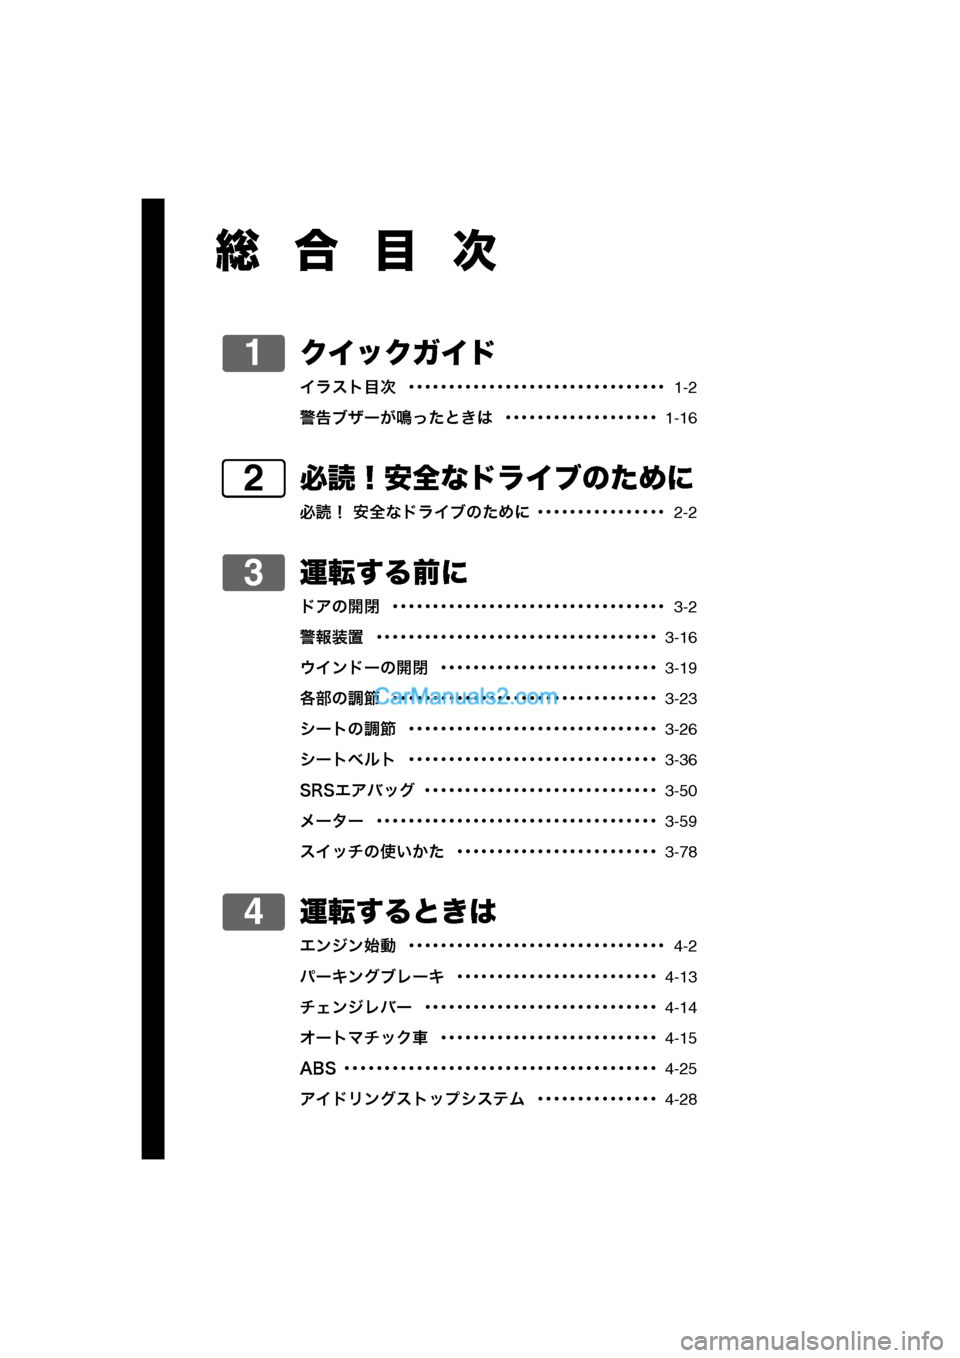 MAZDA MODEL CARROL 2013  取扱説明書 (キャロル) (in Japanese) 総合目次
クイックガイド
イラスト目次  ････････････････････････････････  1-2
警告ブザーが鳴ったときは  ･�